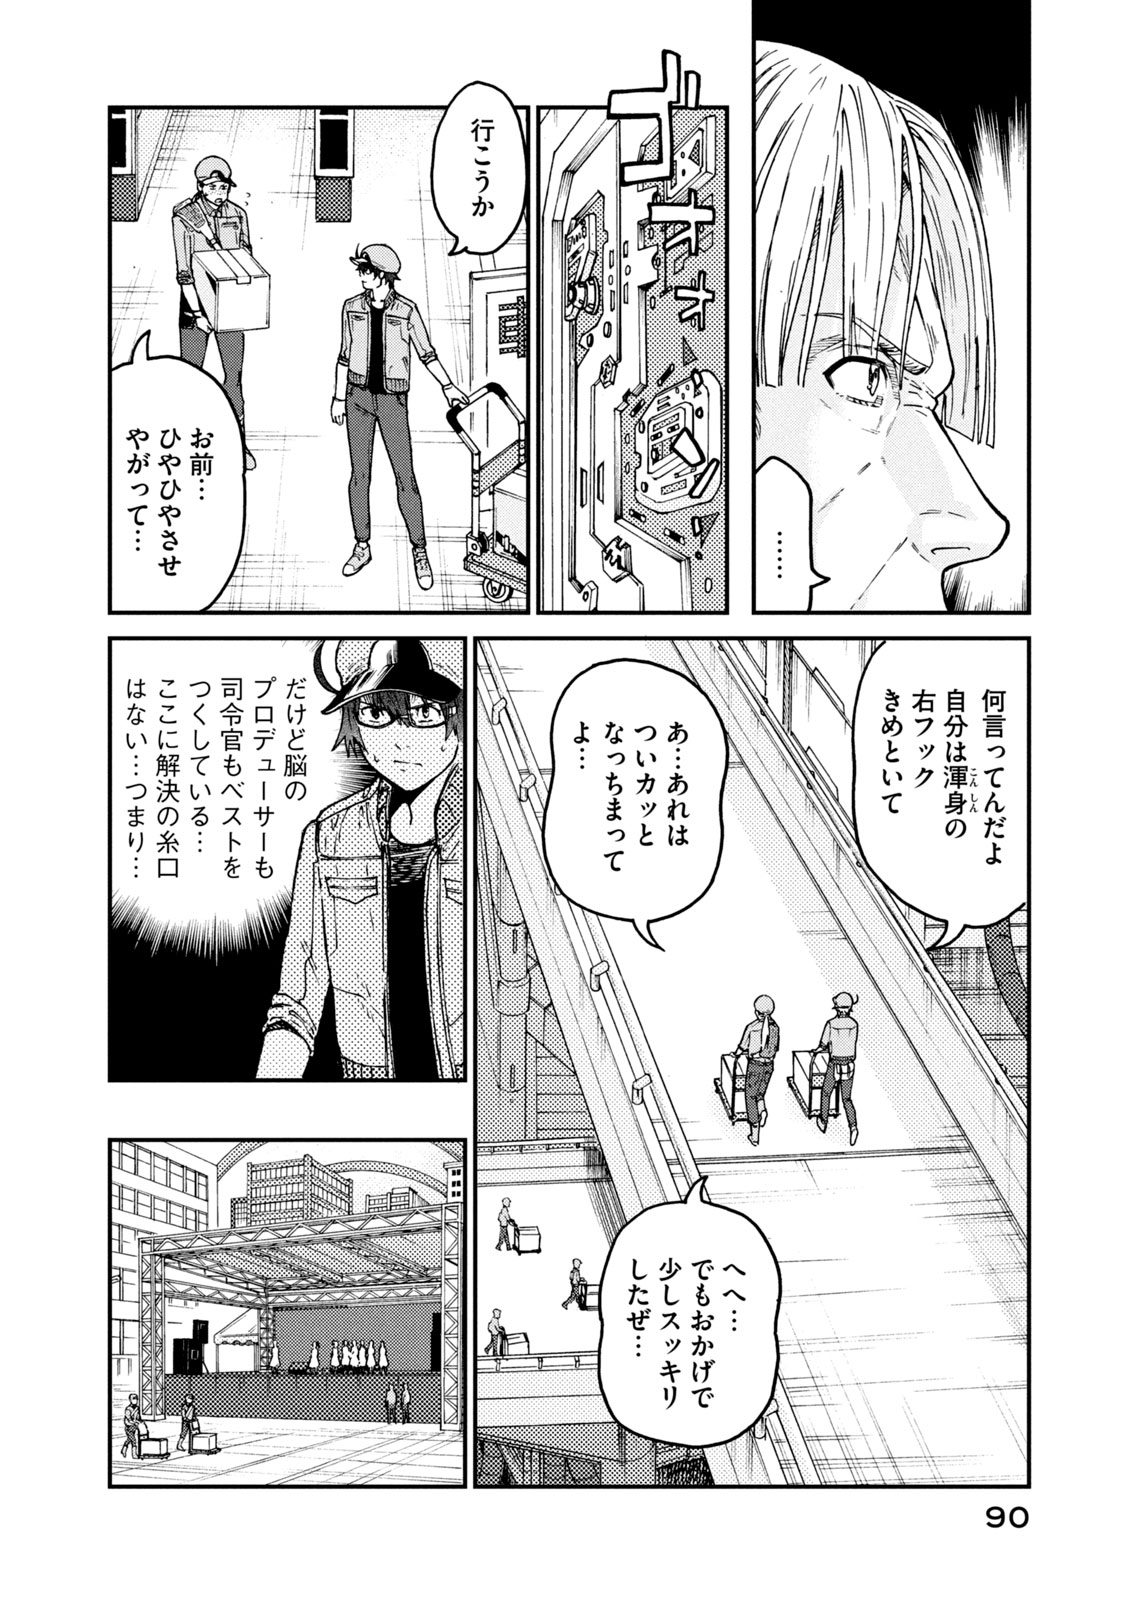 Hataraku Saibou BLACK - Chapter 34 - Page 28